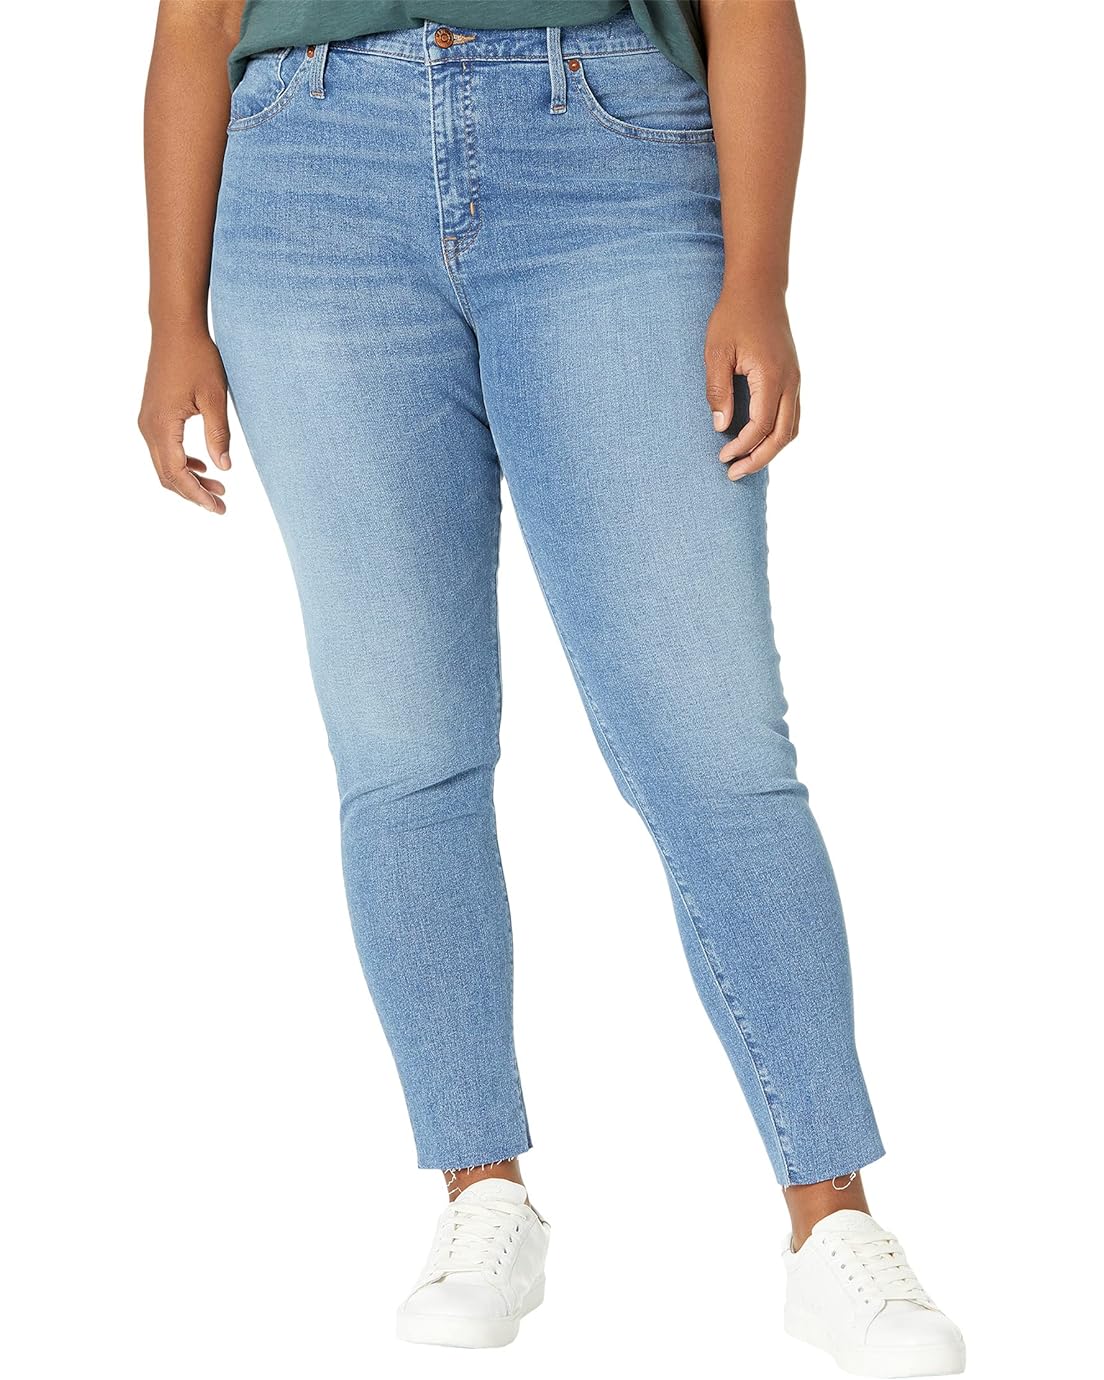 Madewell 9 Mid-Rise Skinny Jeans in Krasner Wash: TENCEL Denim Edition